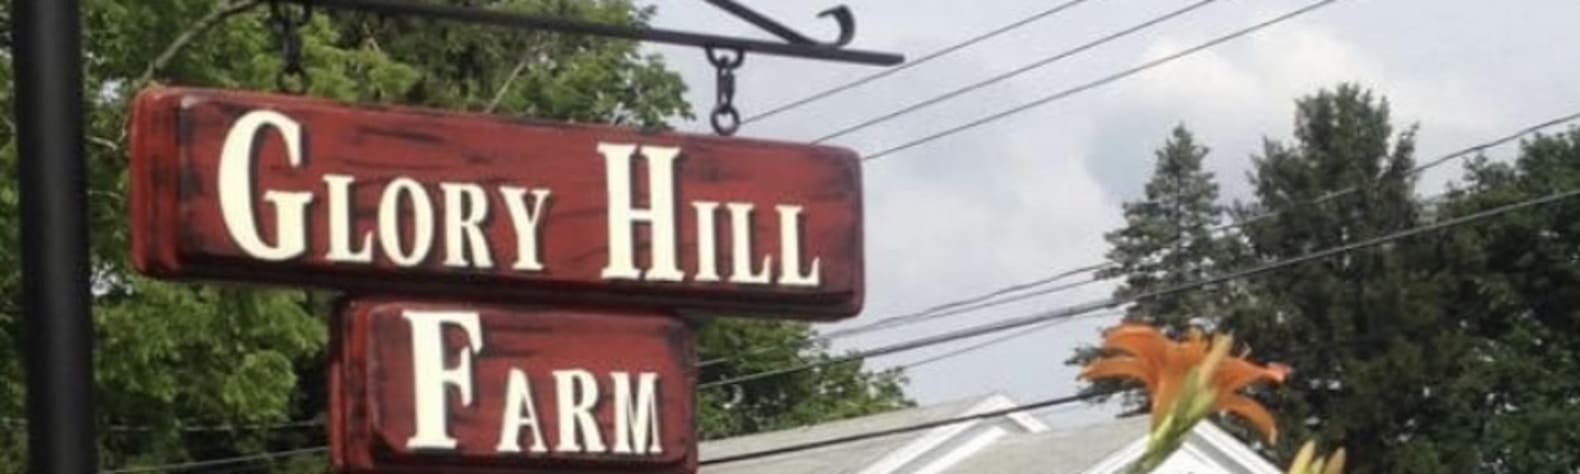 Glory Hill Farm